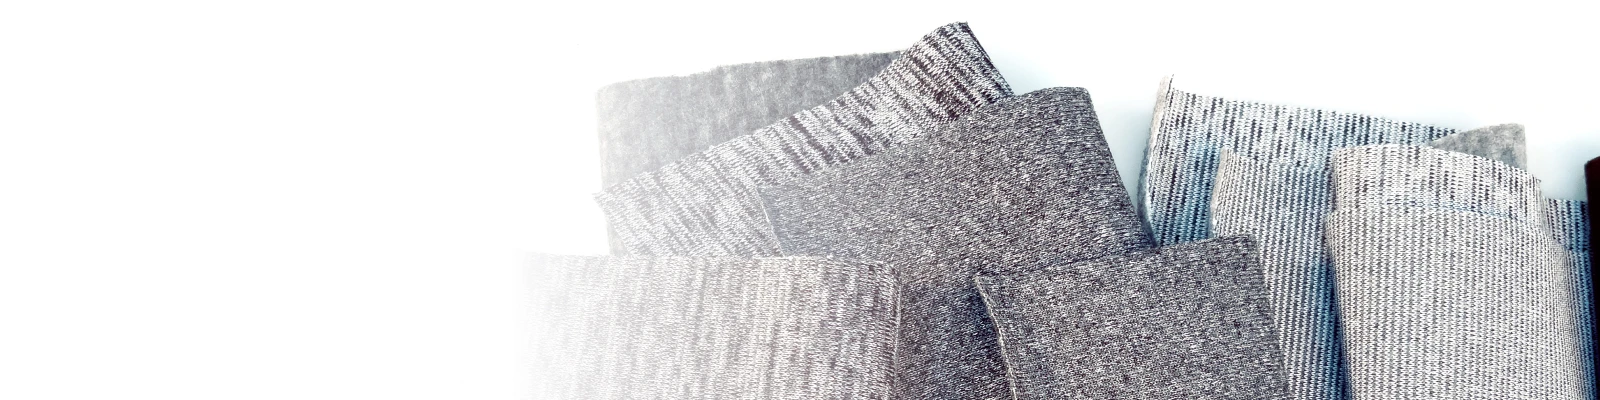 Sweater Fleece Fabric